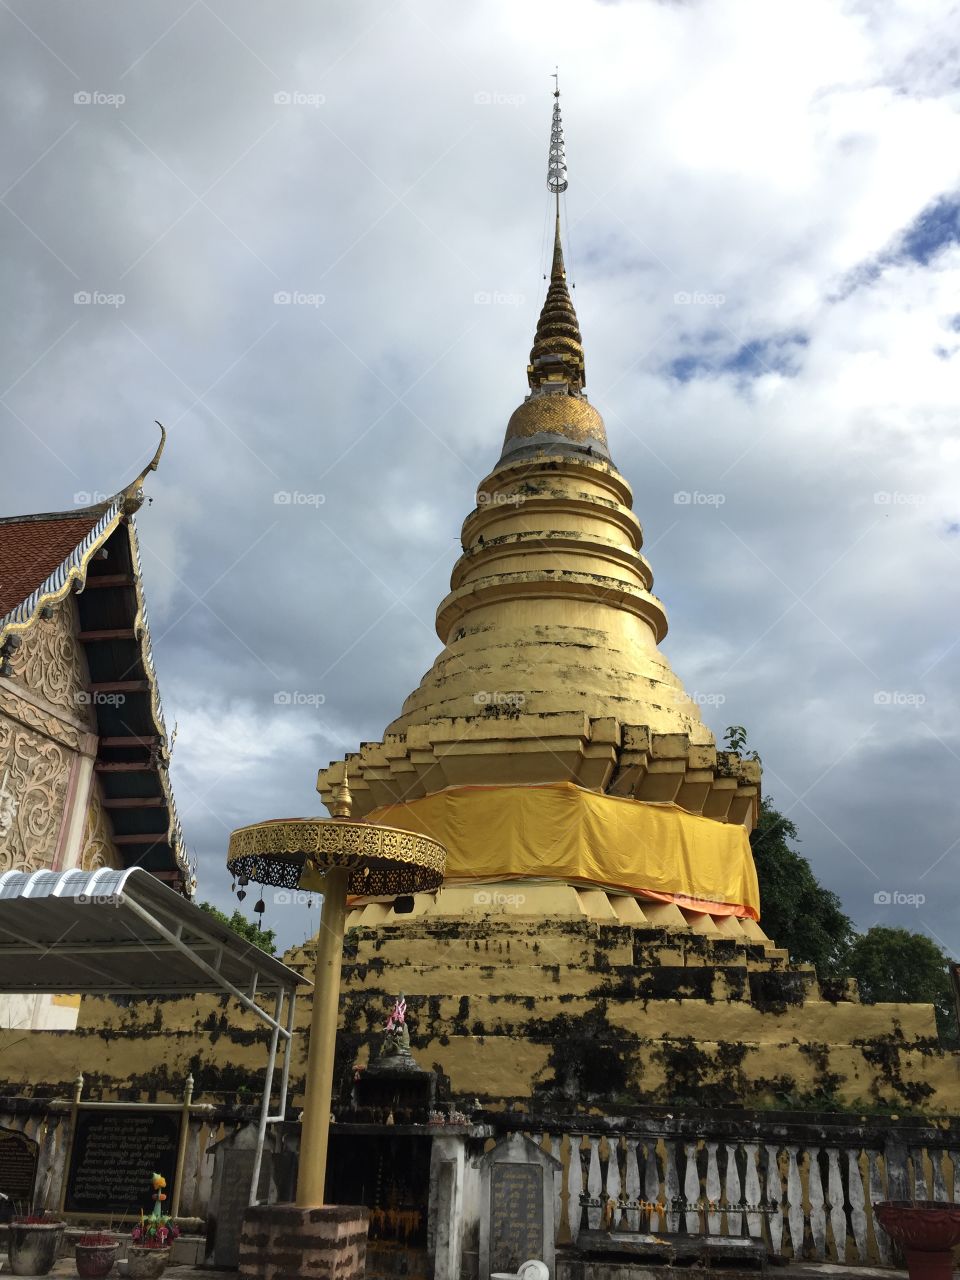 Wat Phra That Jomping
Lampang